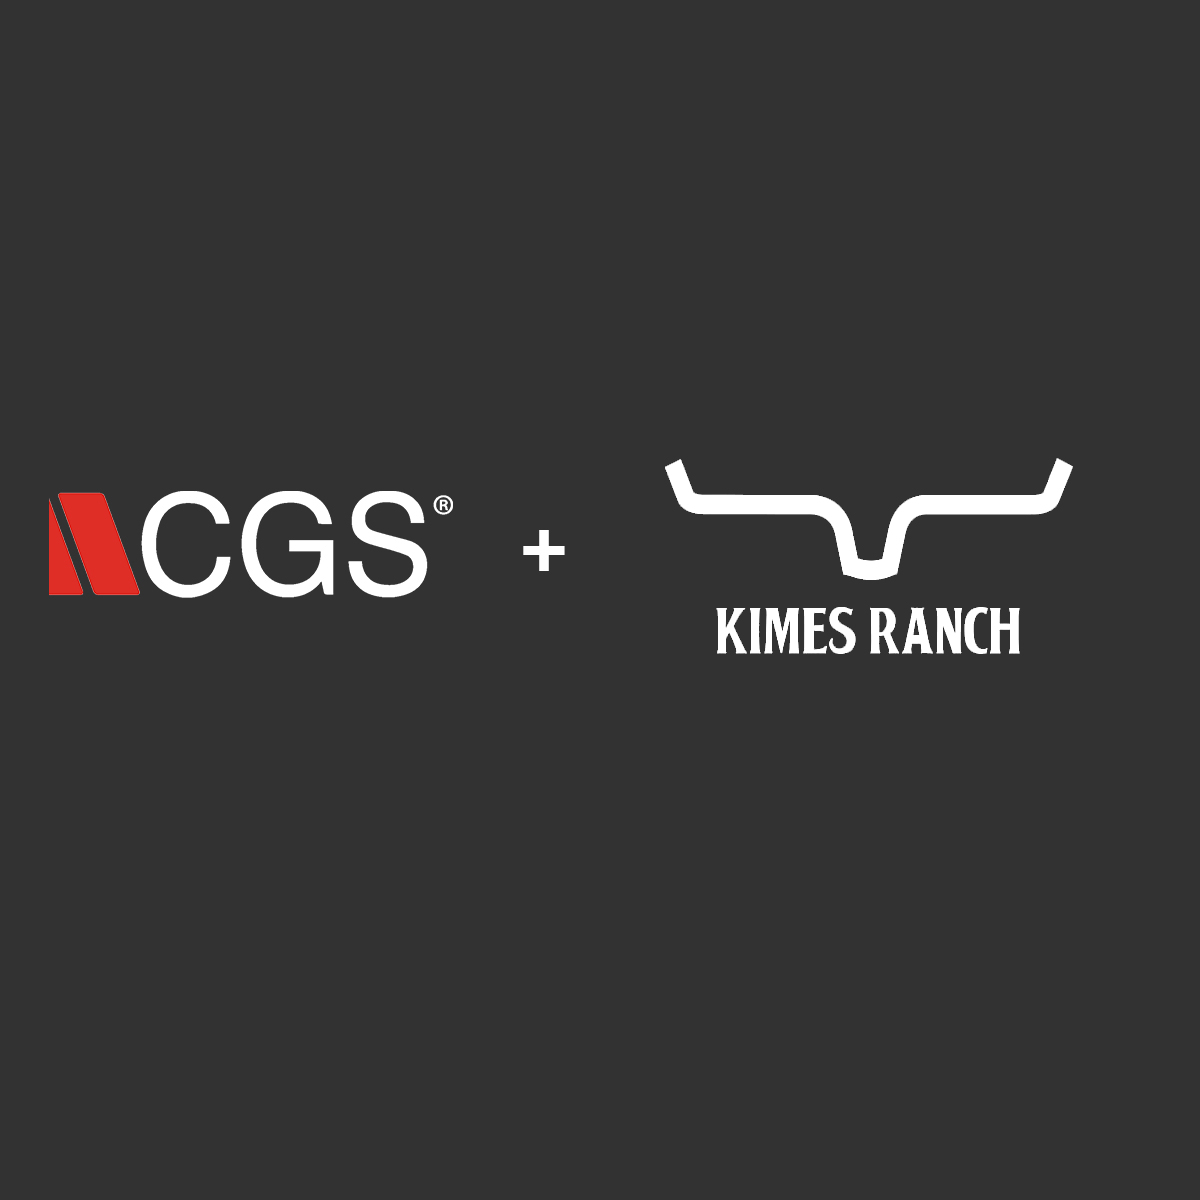 CGS and Kimes Ranch logos